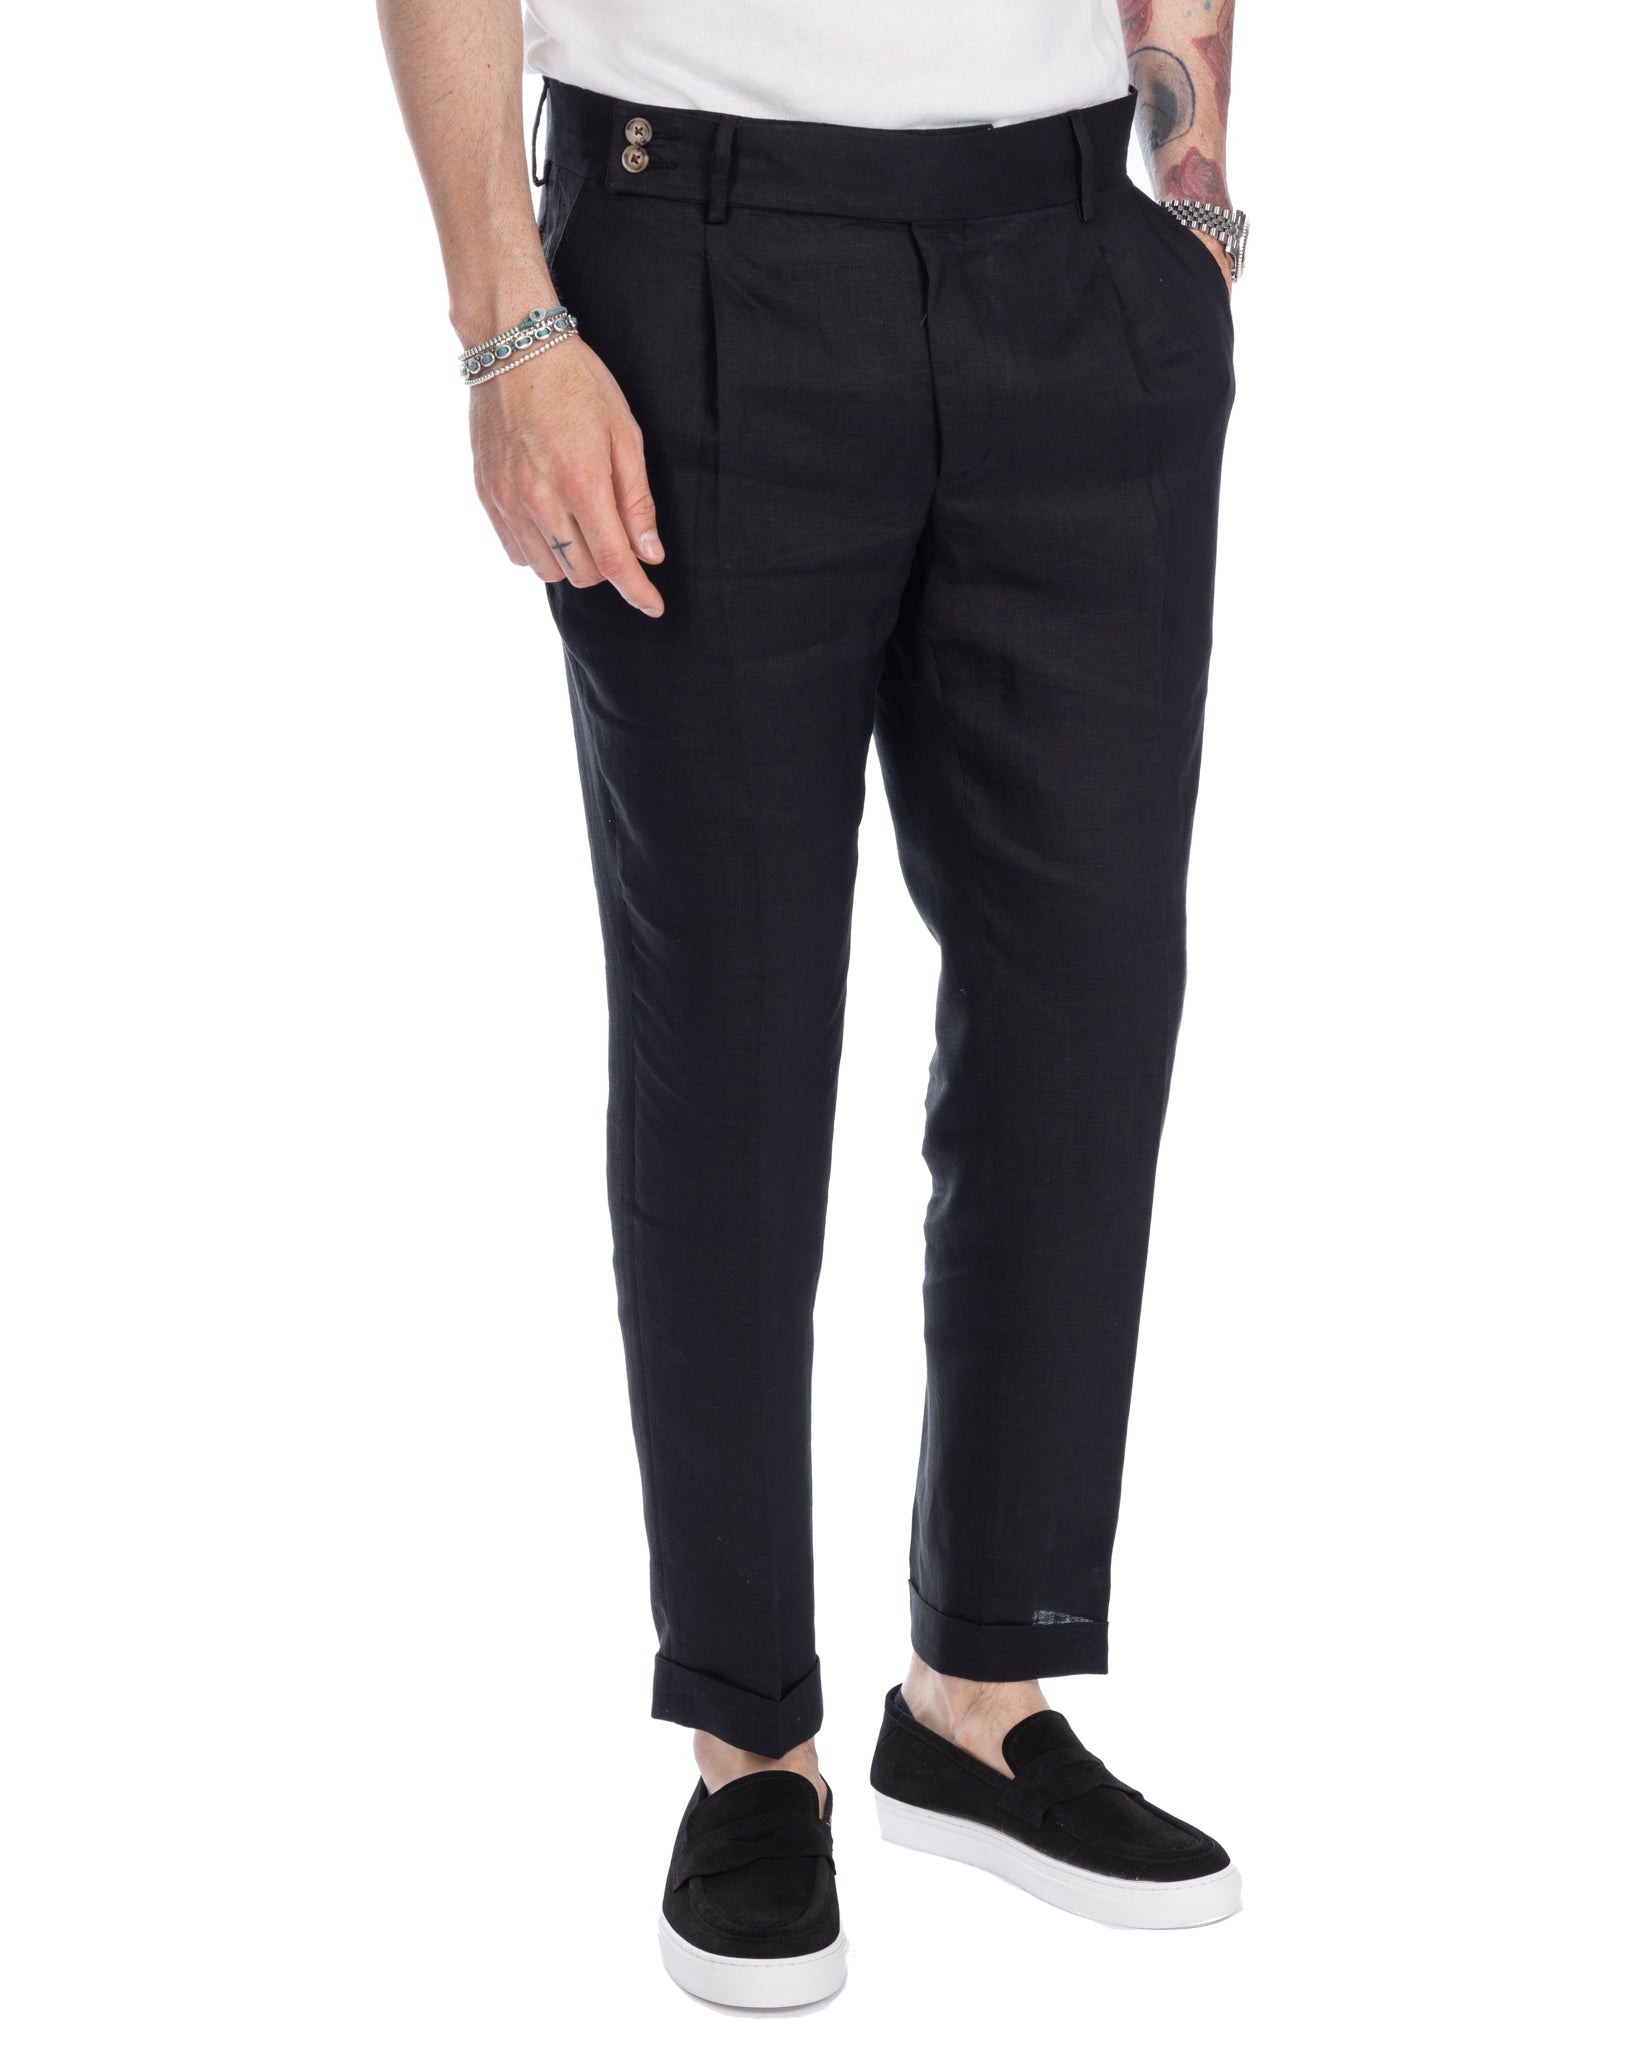 Sorso - pantalon taille haute noir en pur lin